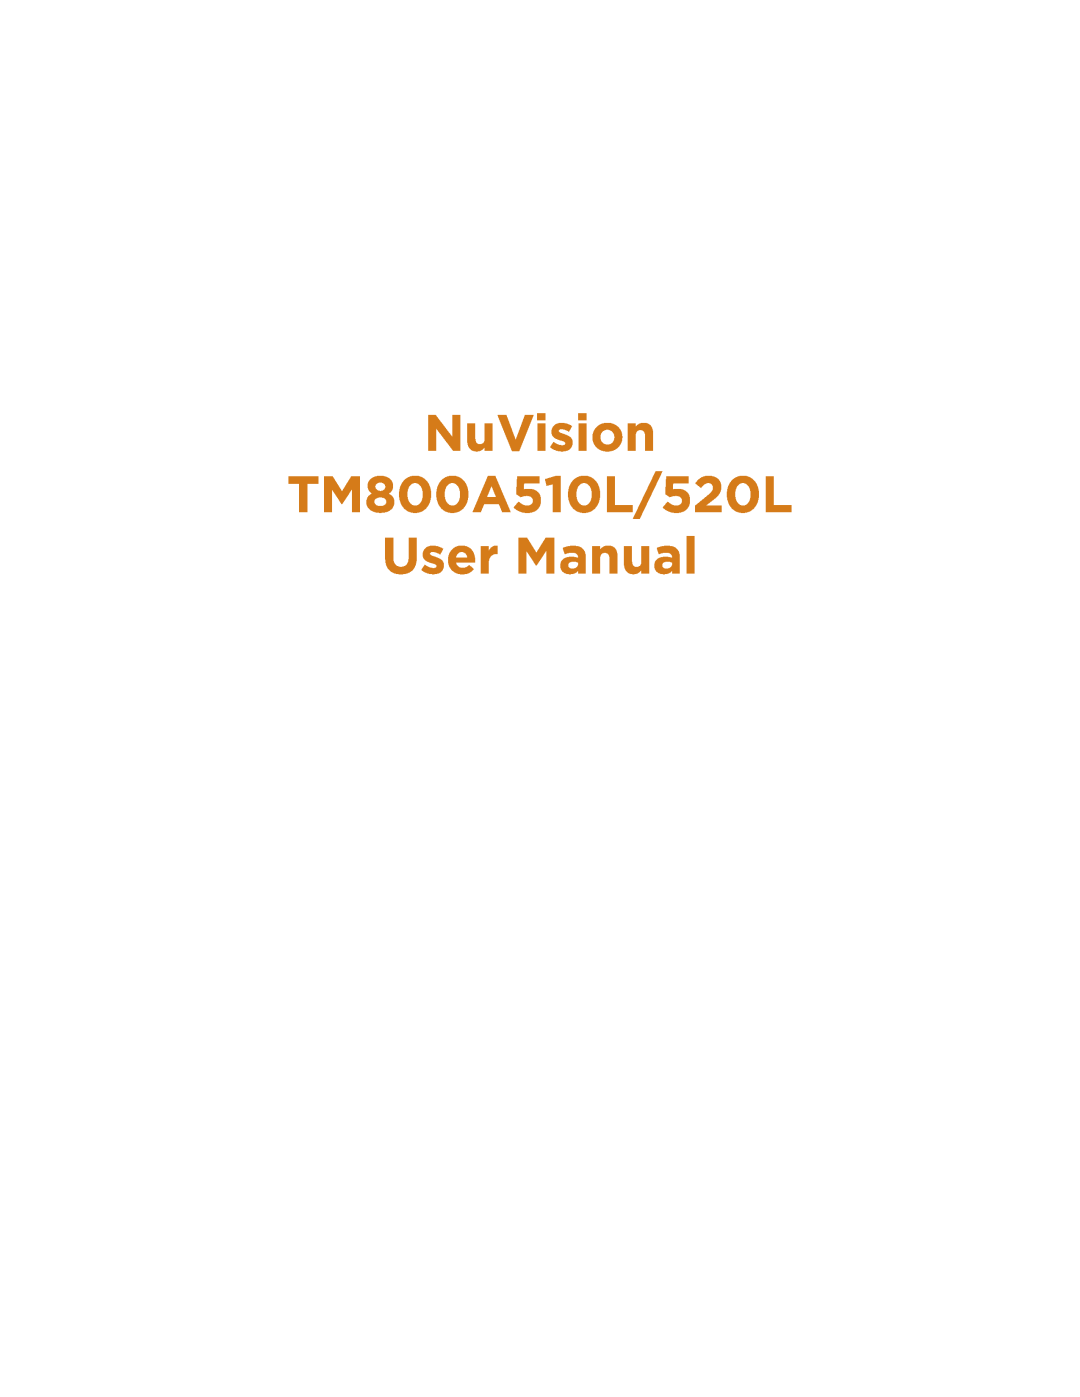 NuVision TM800A520L user manual NuVision TM800A510L/520L User Manual 